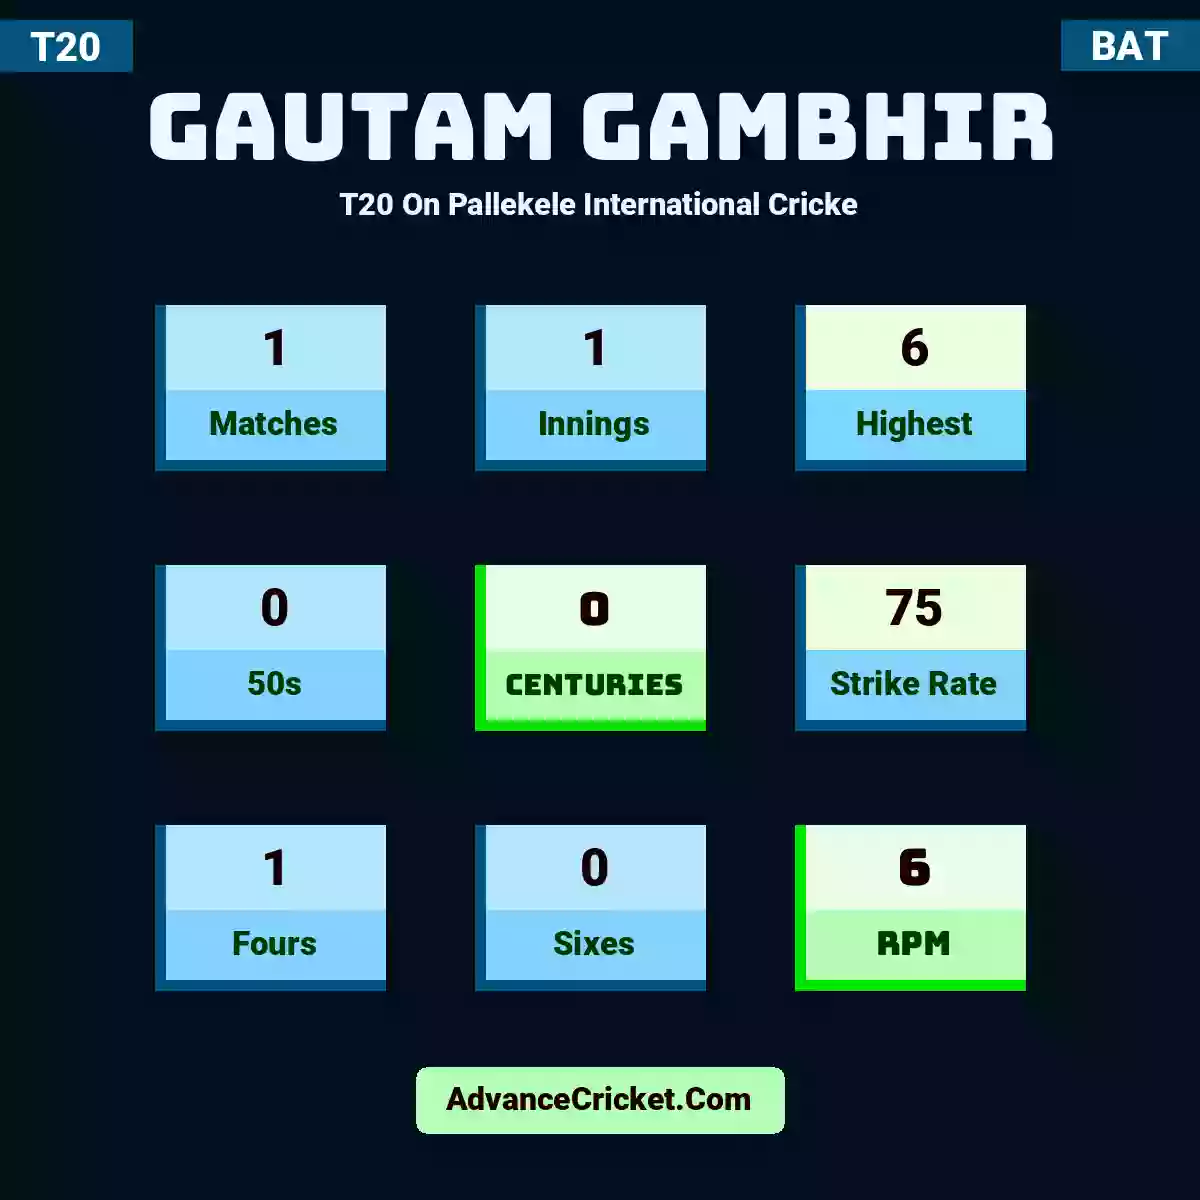 Gautam Gambhir T20  On Pallekele International Cricke, Gautam Gambhir played 1 matches, scored 6 runs as highest, 0 half-centuries, and 0 centuries, with a strike rate of 75. G.Gambhir hit 1 fours and 0 sixes, with an RPM of 6.